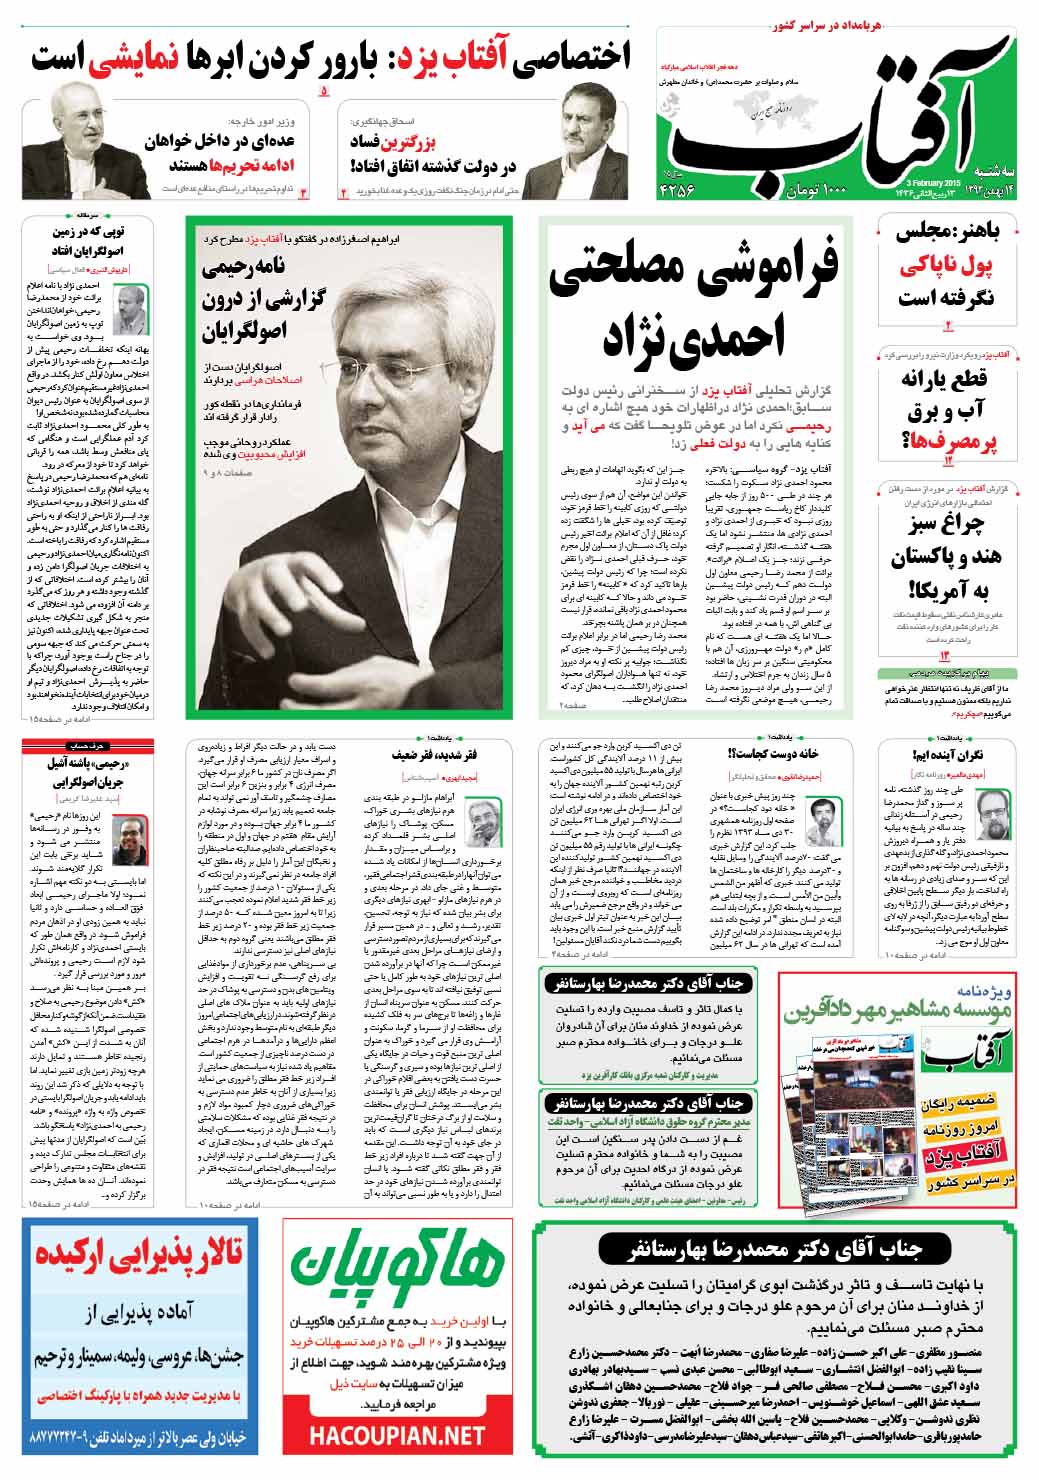 www.dustaan.com-صفحه نخست روزنامه های سیاسی اجتماعی چهارشنبه ۹۳۱۱۱۵-۱۰۰۸